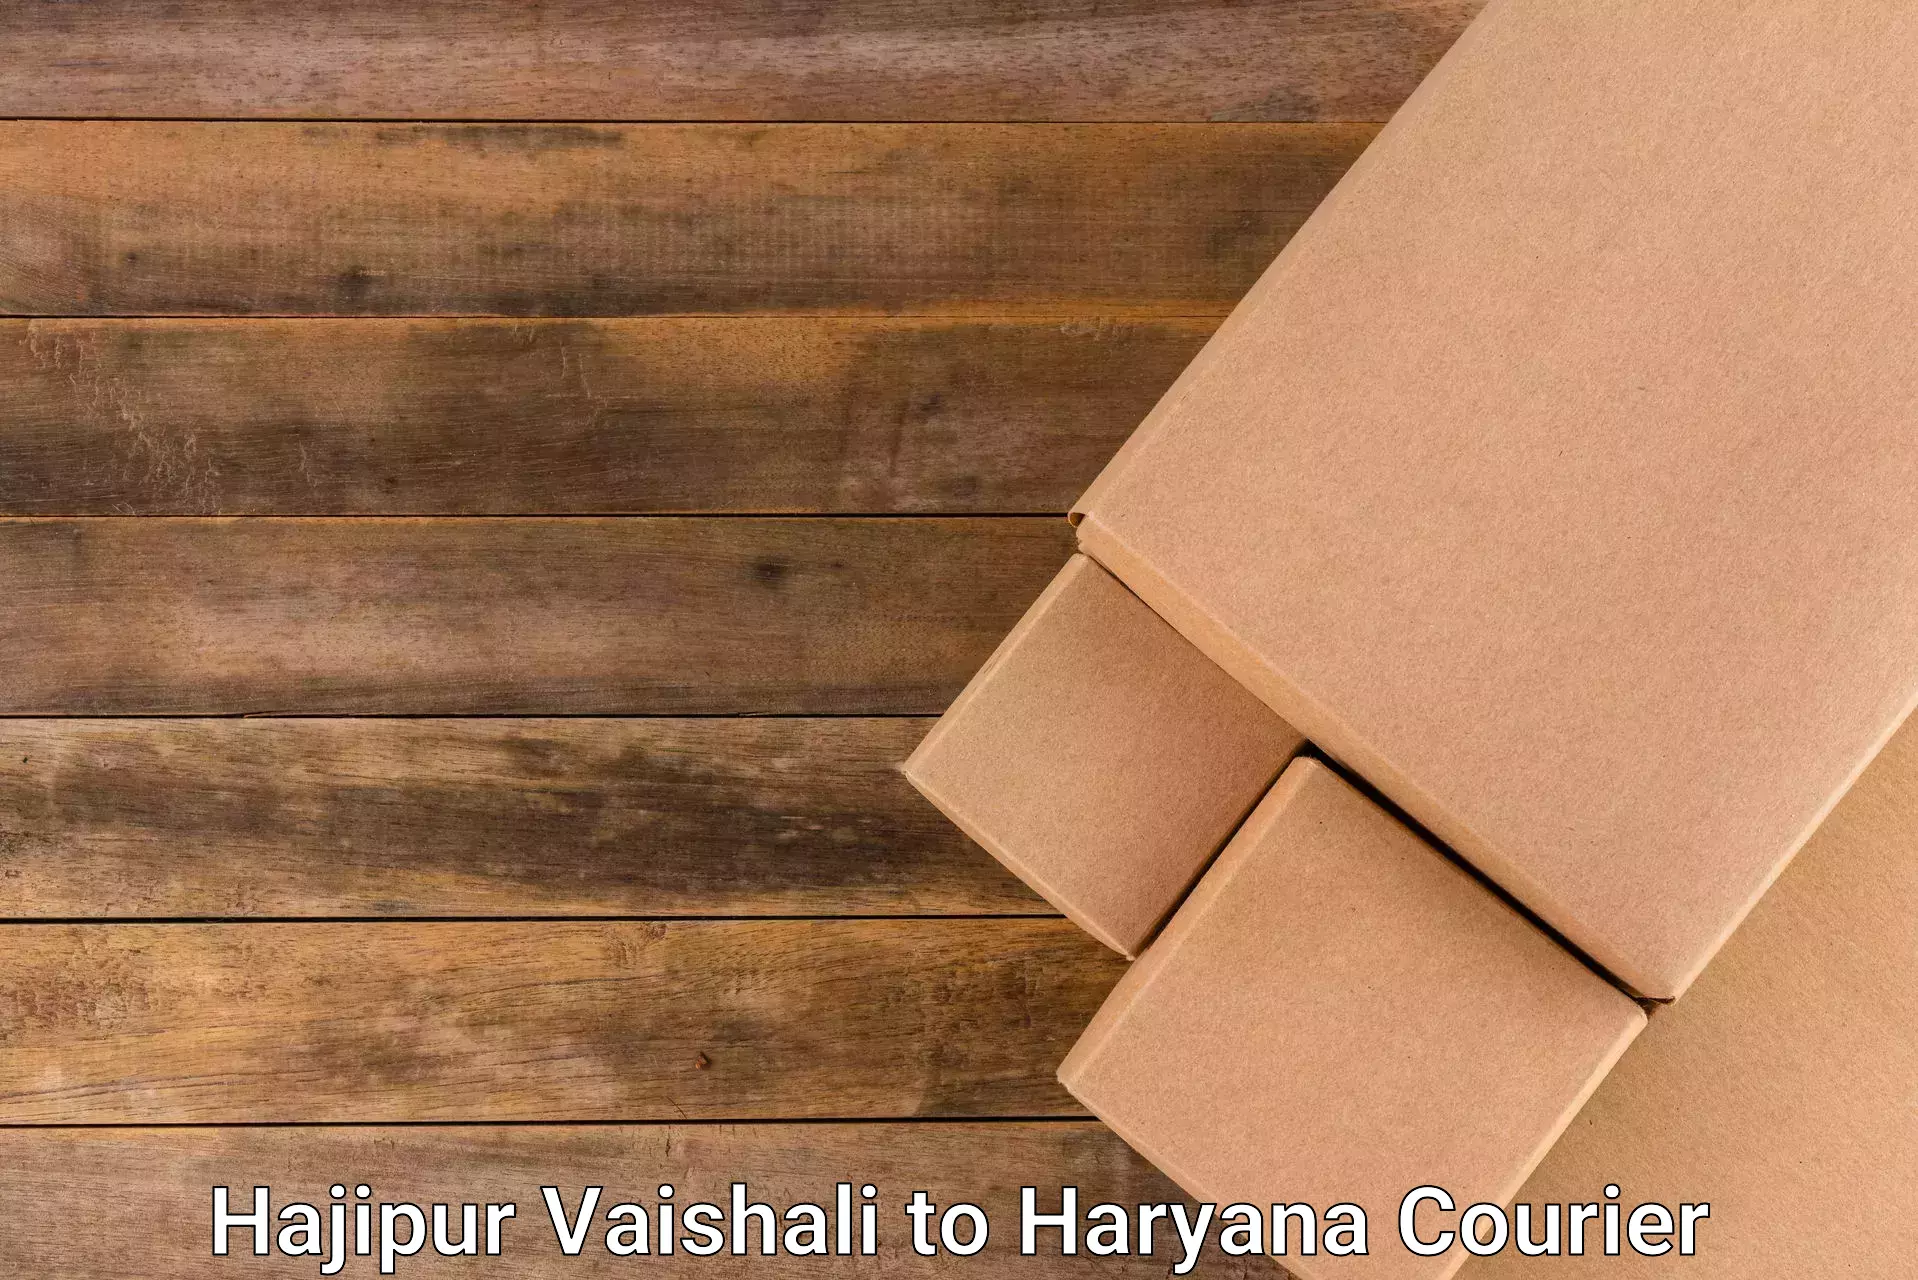 Enhanced tracking features Hajipur Vaishali to Haryana